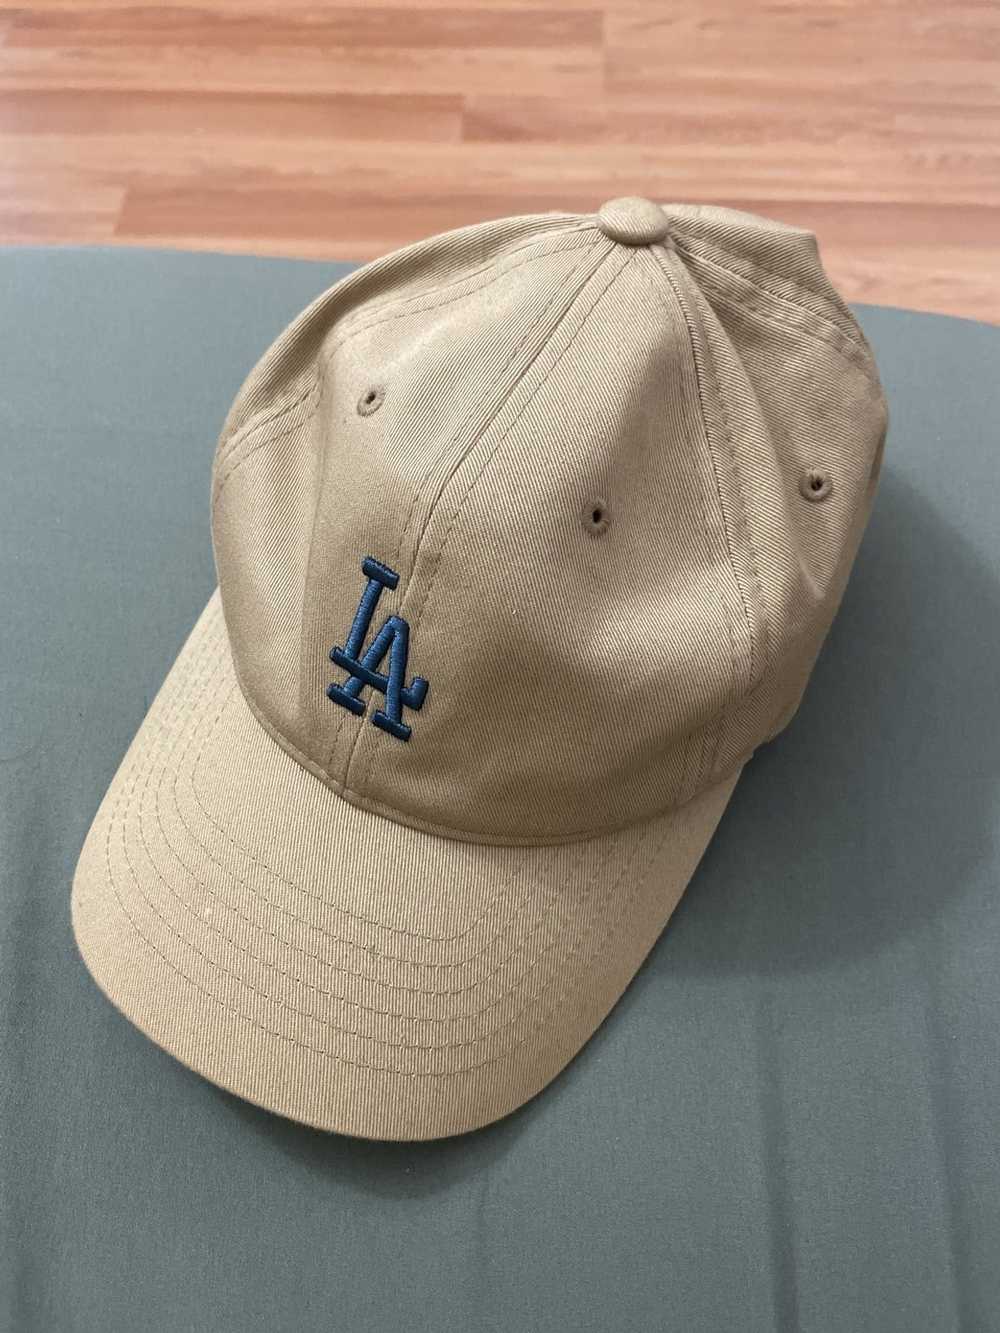 47 Brand Los Angeles Dodgers Cap (vintage navy)